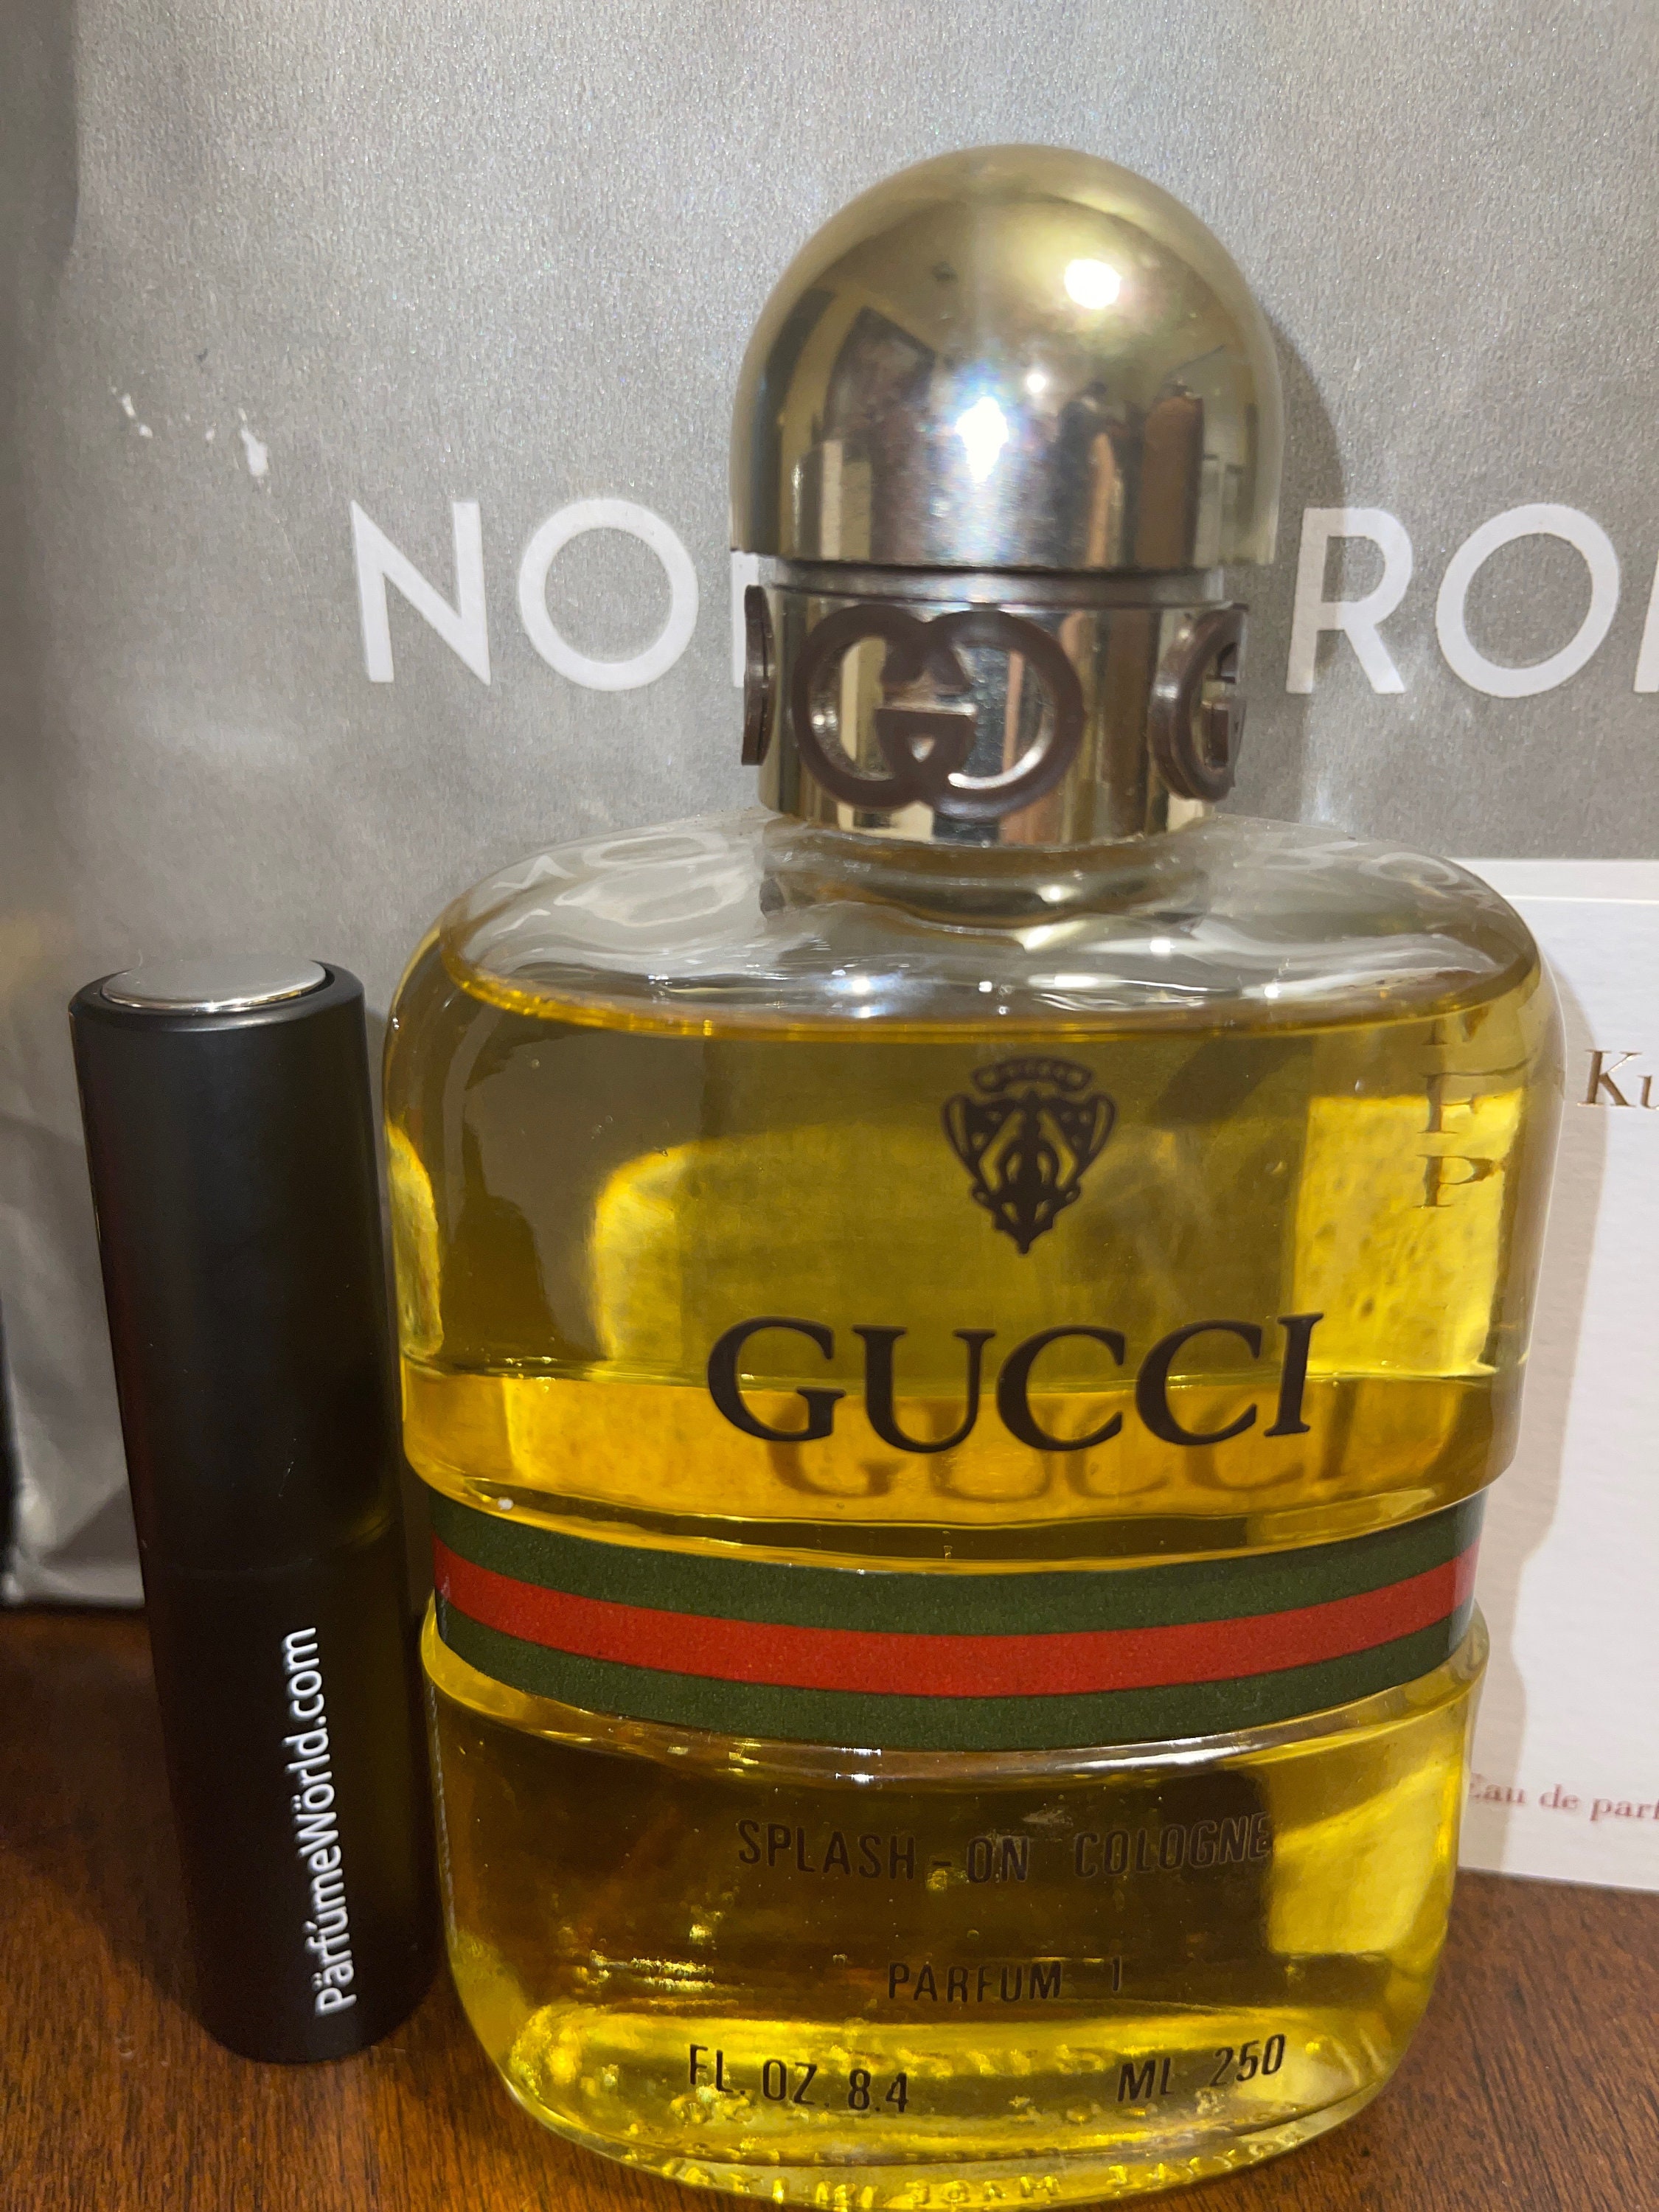 Wholesale Perfume Oils; Premium IMPRESSION of Guchie Oud; 2oz with